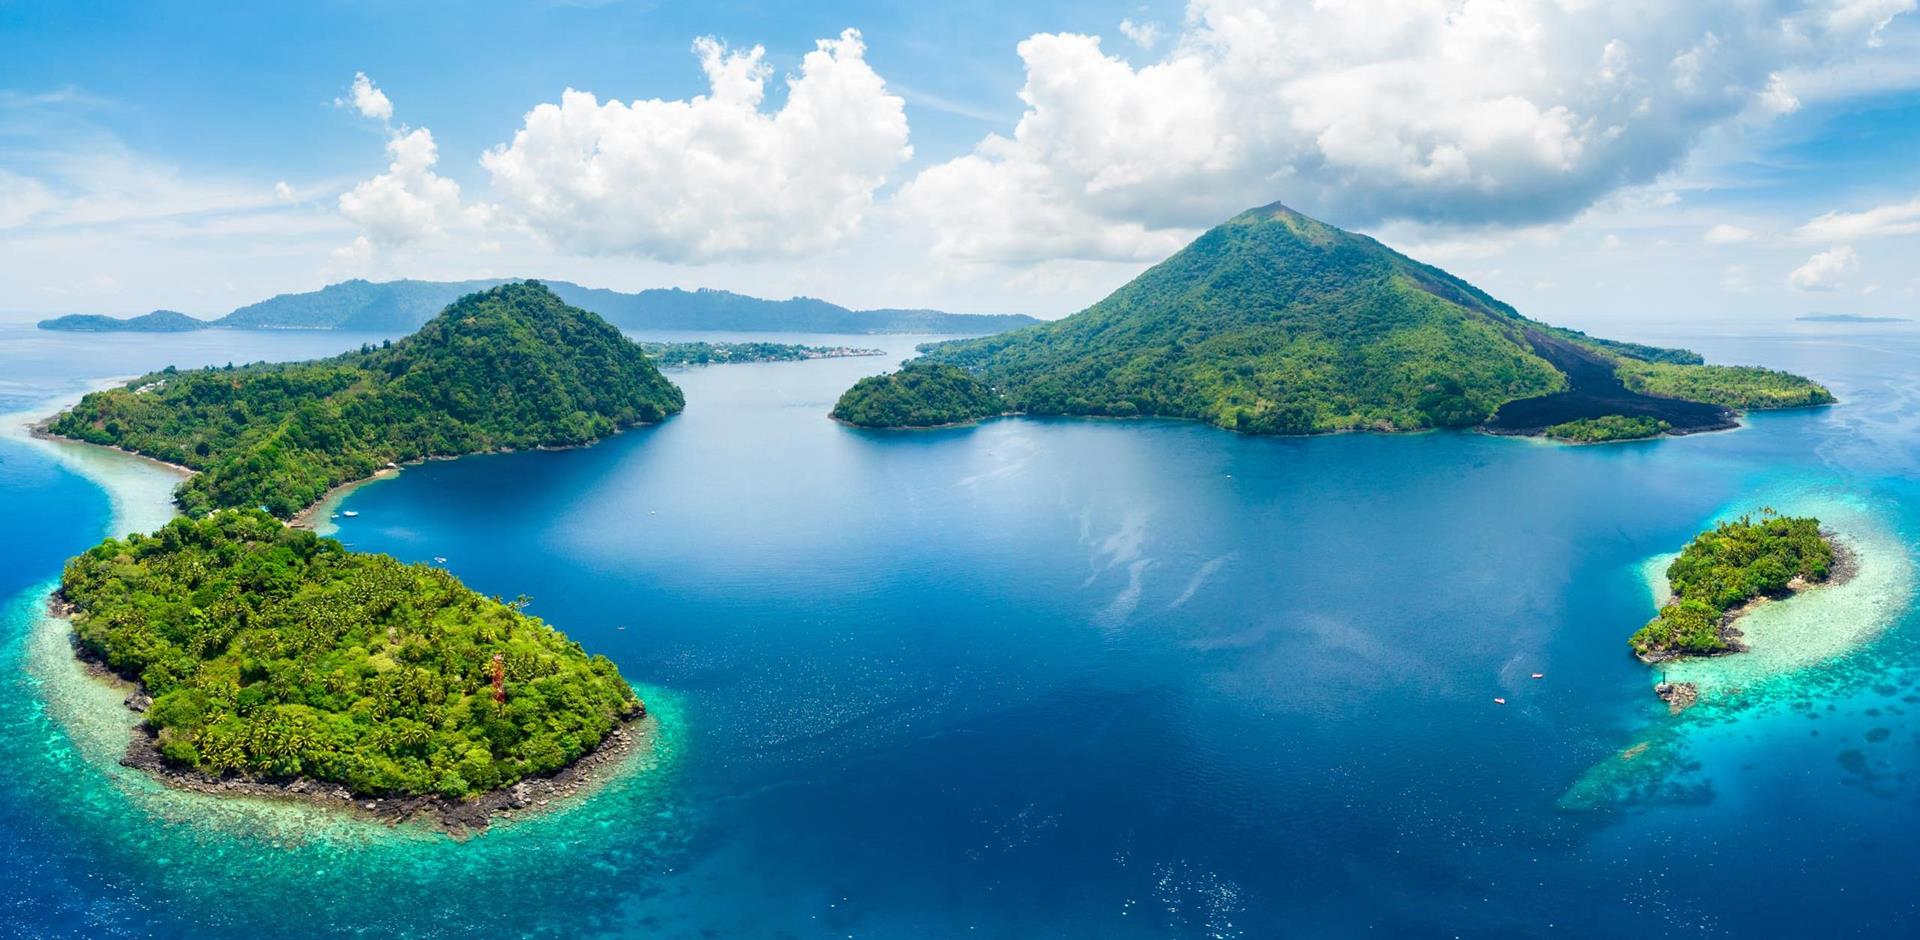 Banda archipelago Maluku Islands Indonesia